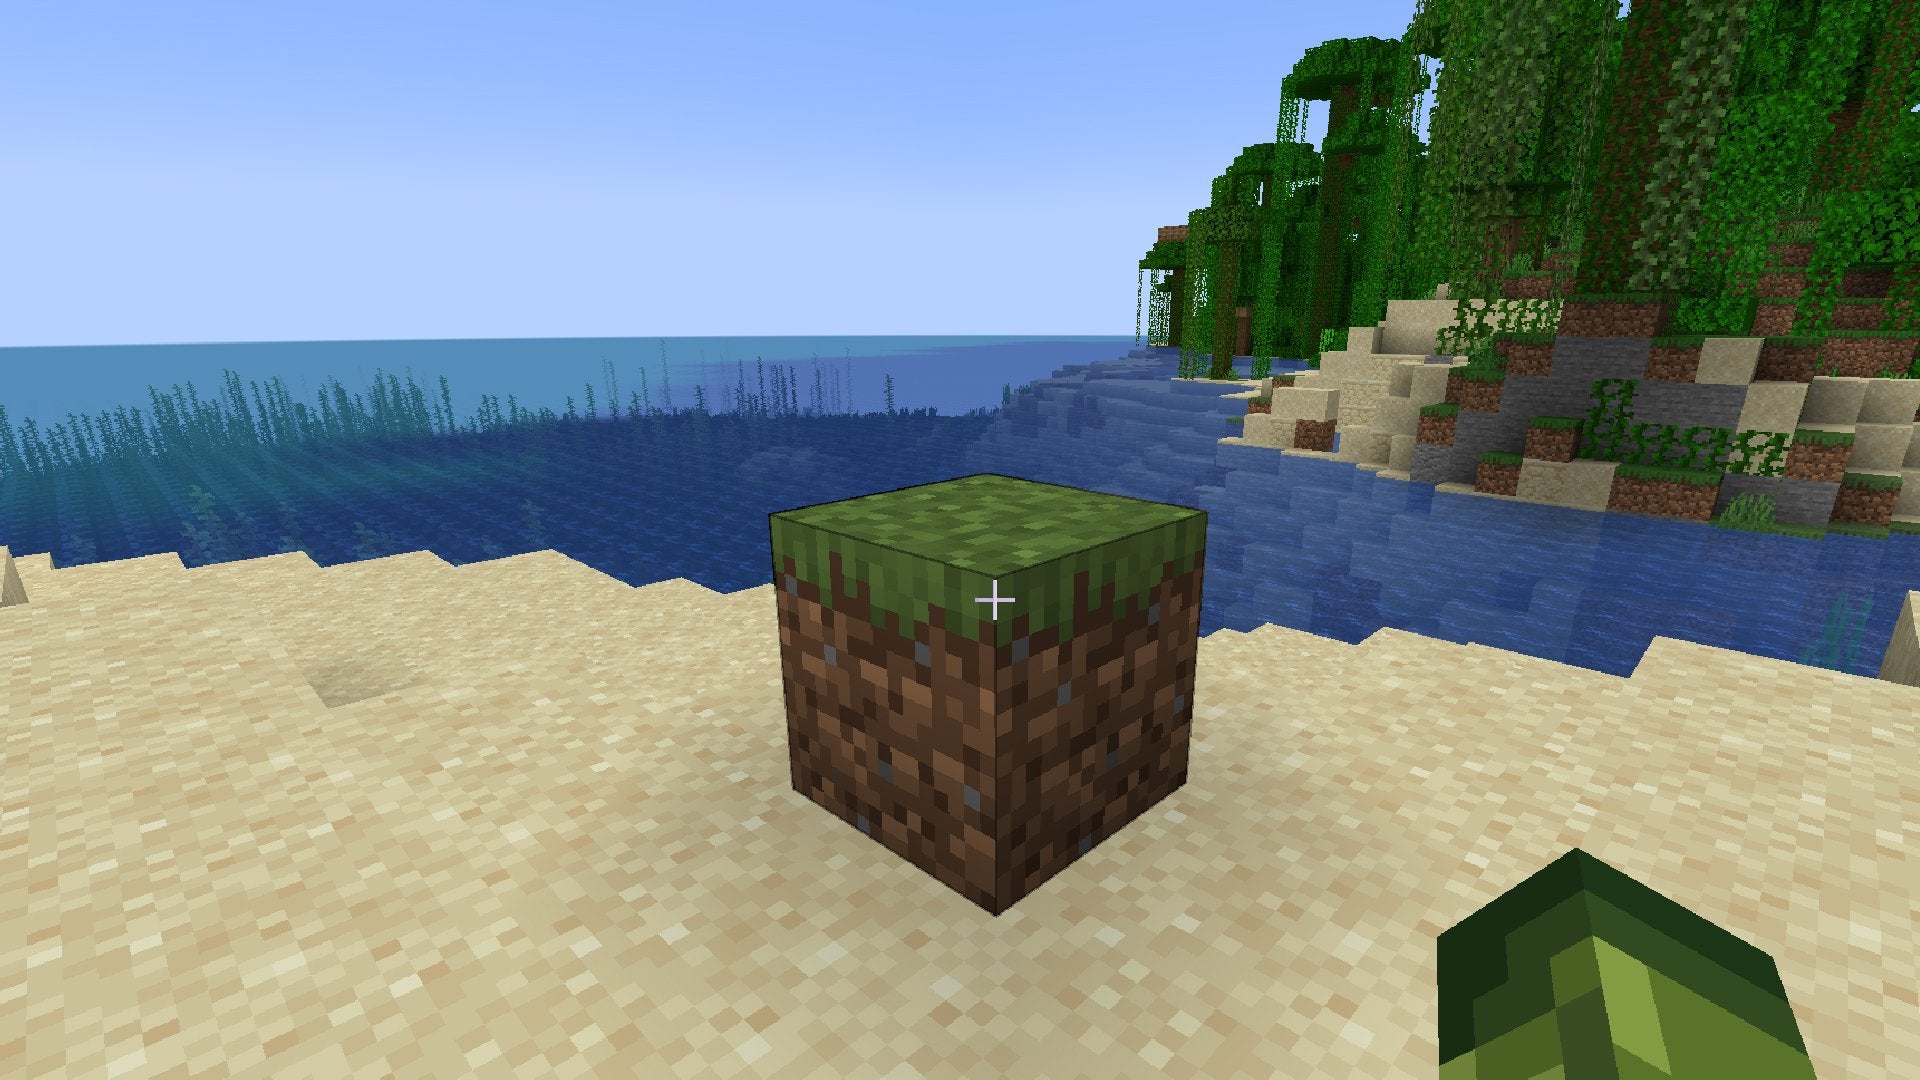 A Grass block on a beach in Minecraft.